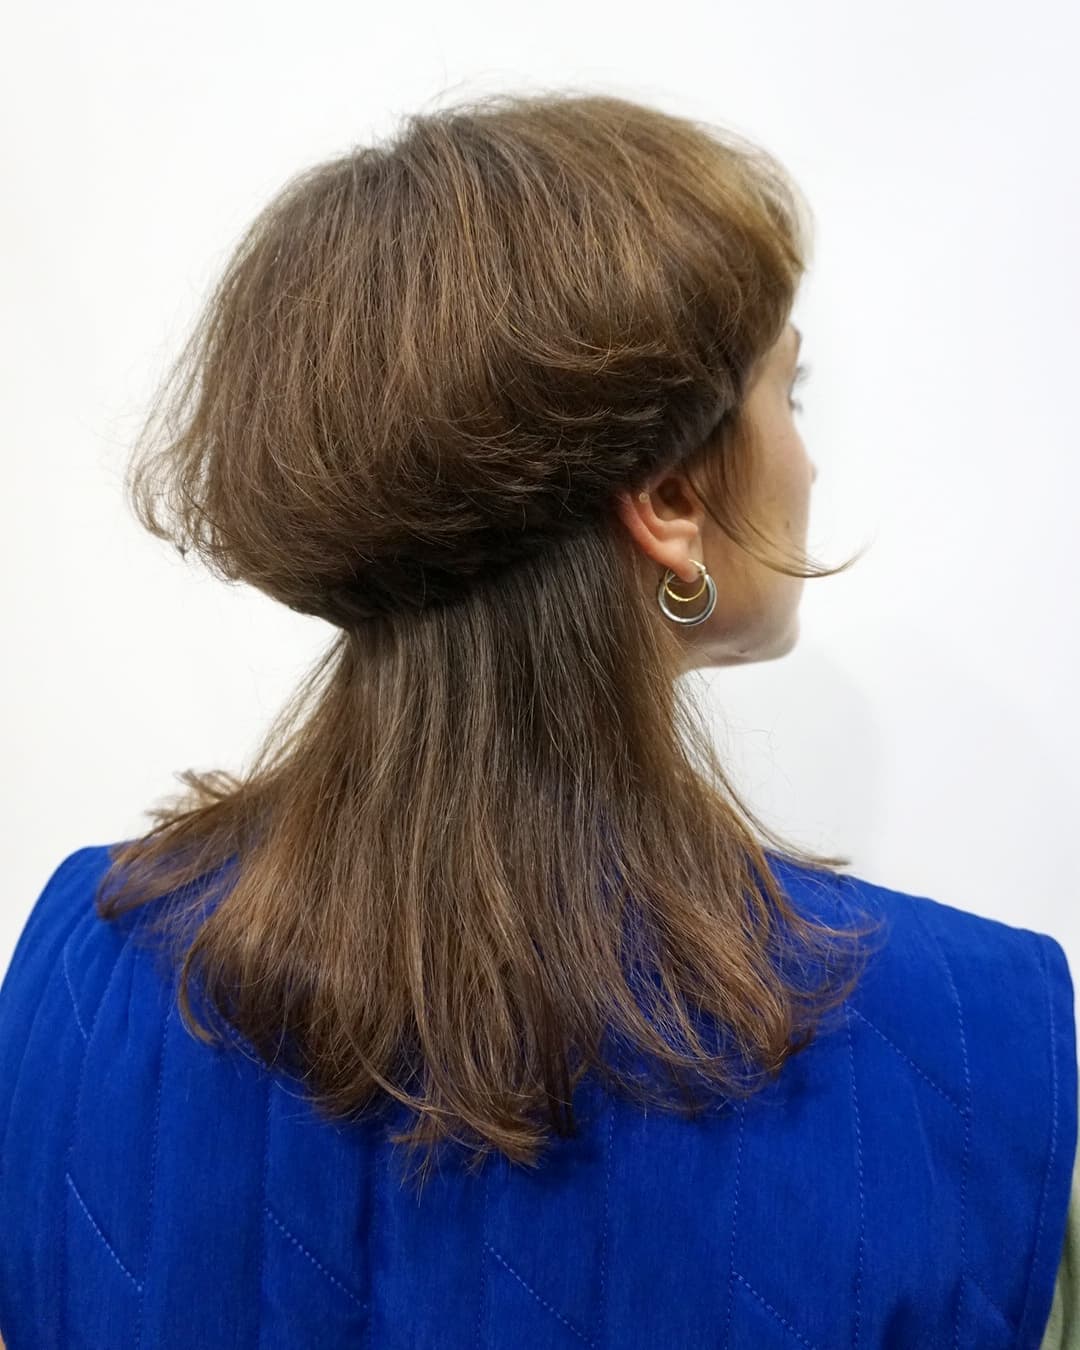 Jellyfish Bowl Cut for Shoulder Length Hair